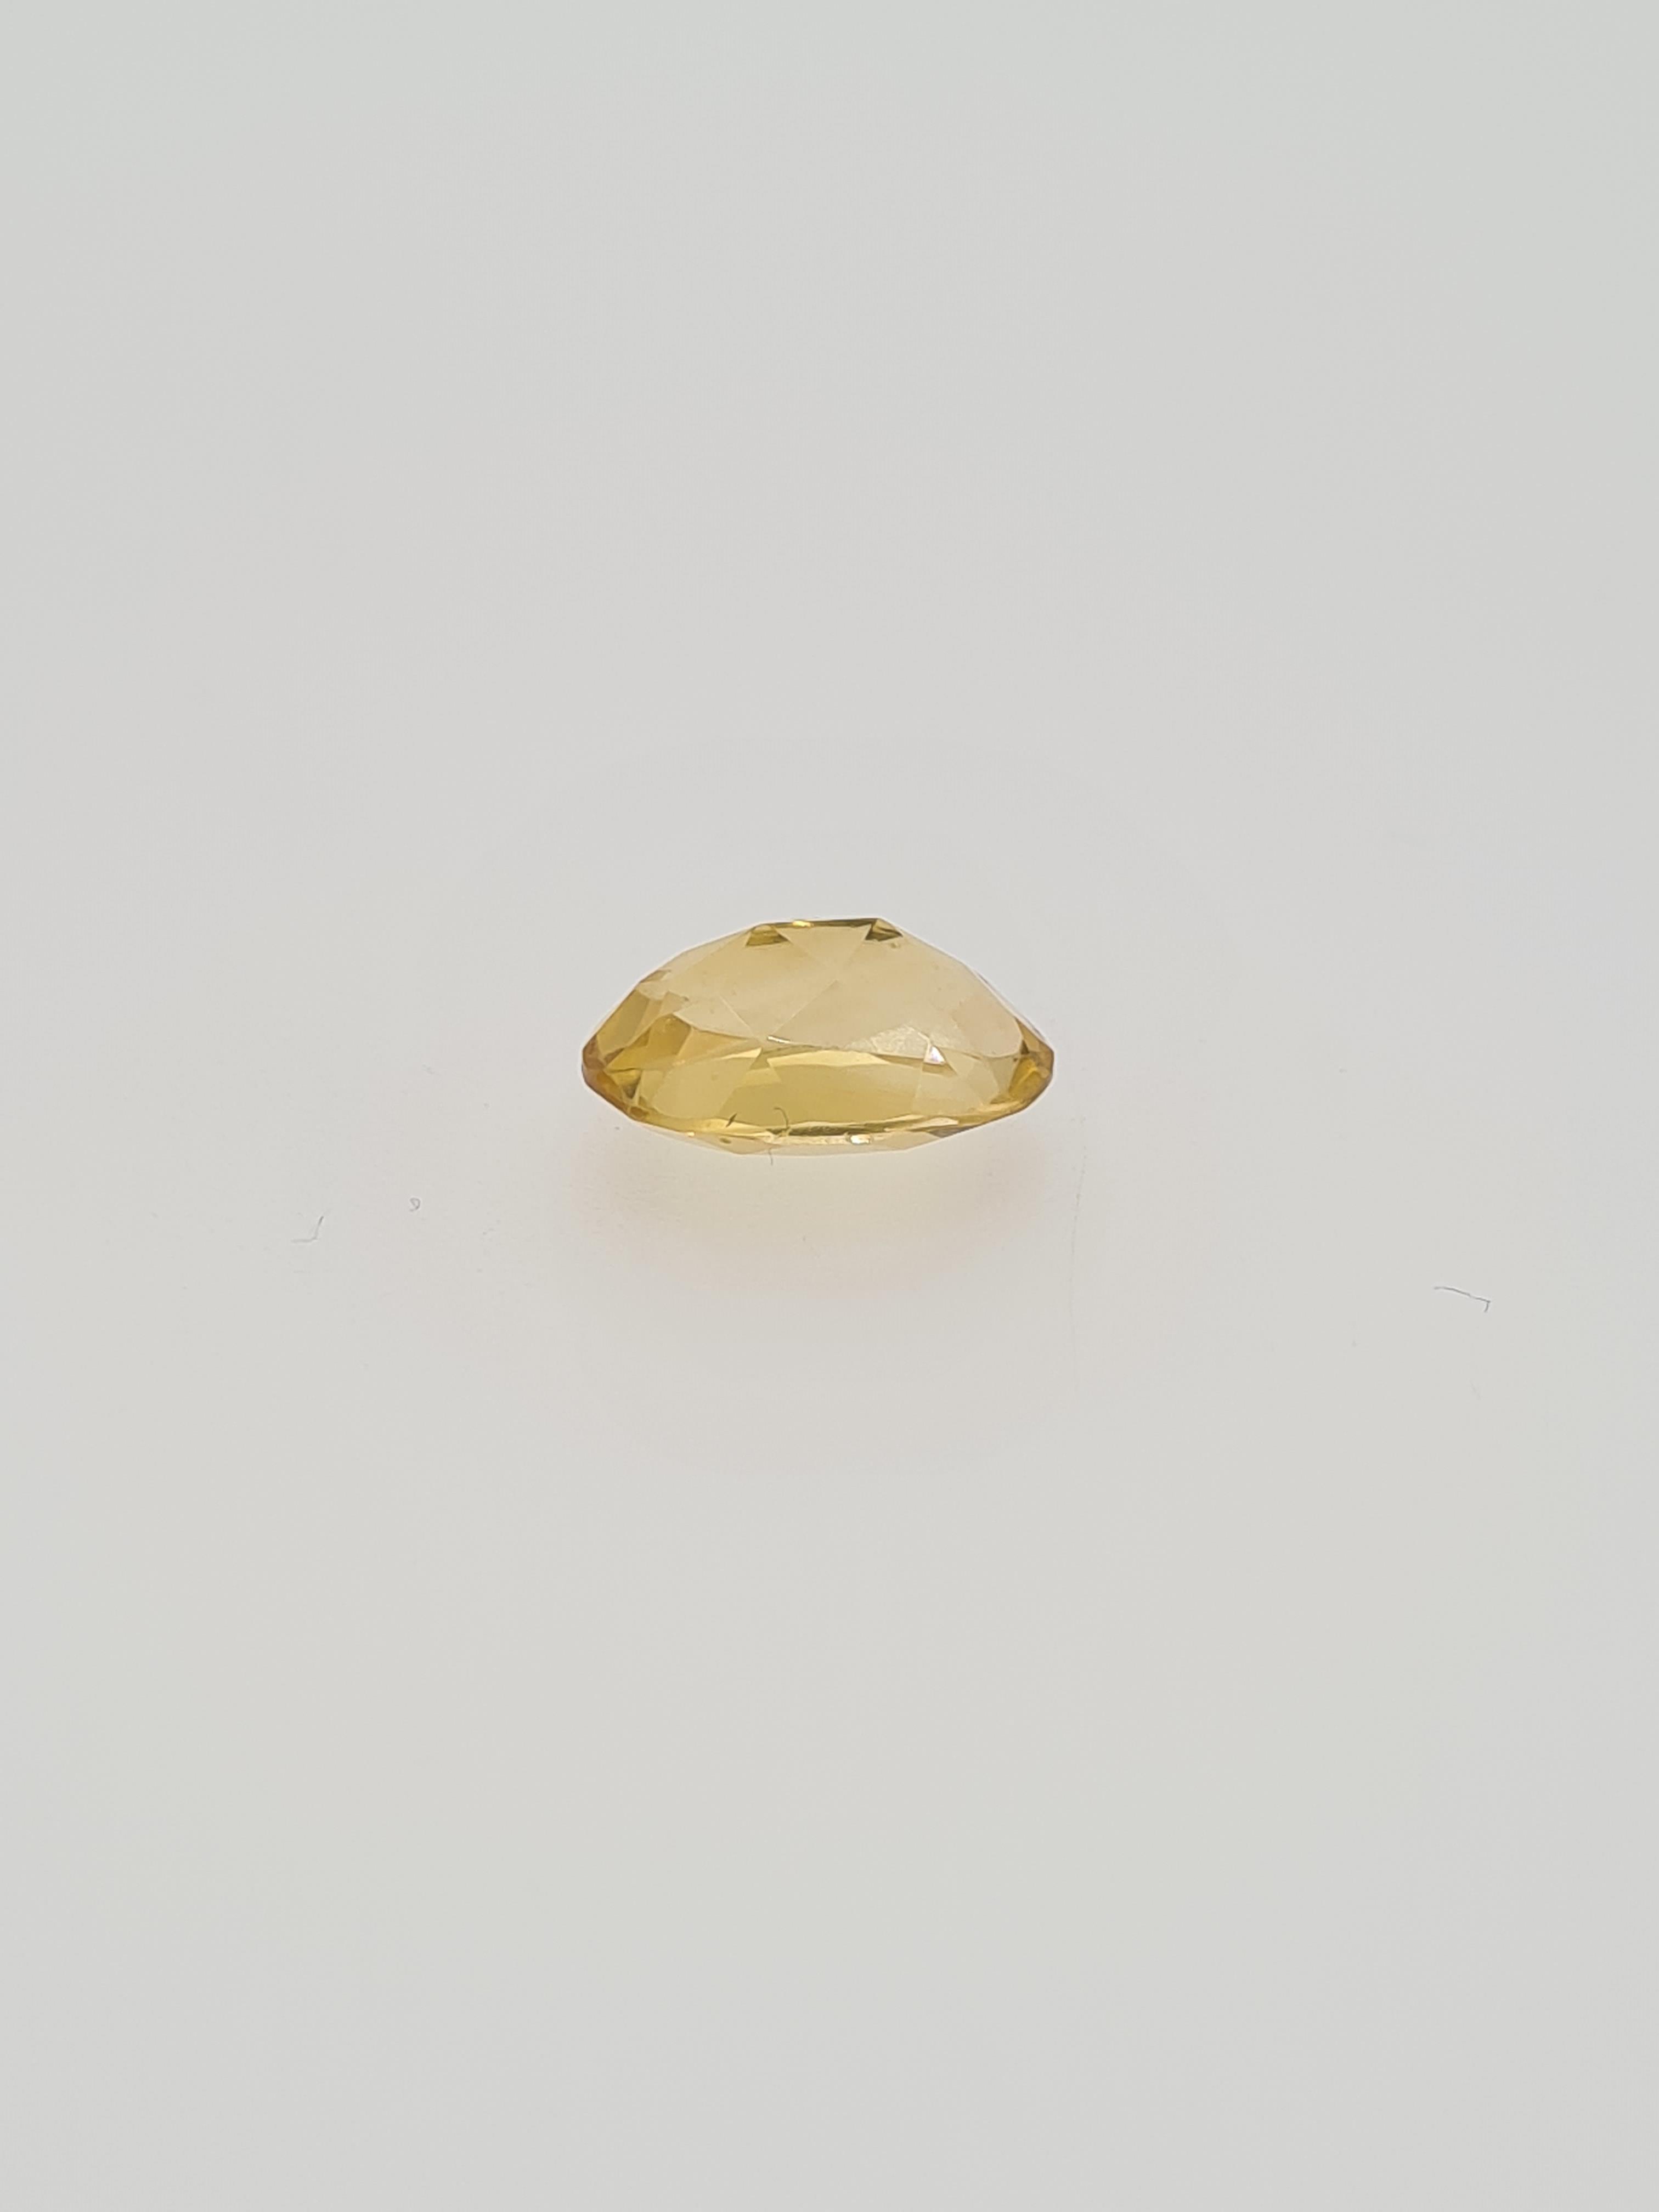 Citrine oval gem stone - Image 2 of 4